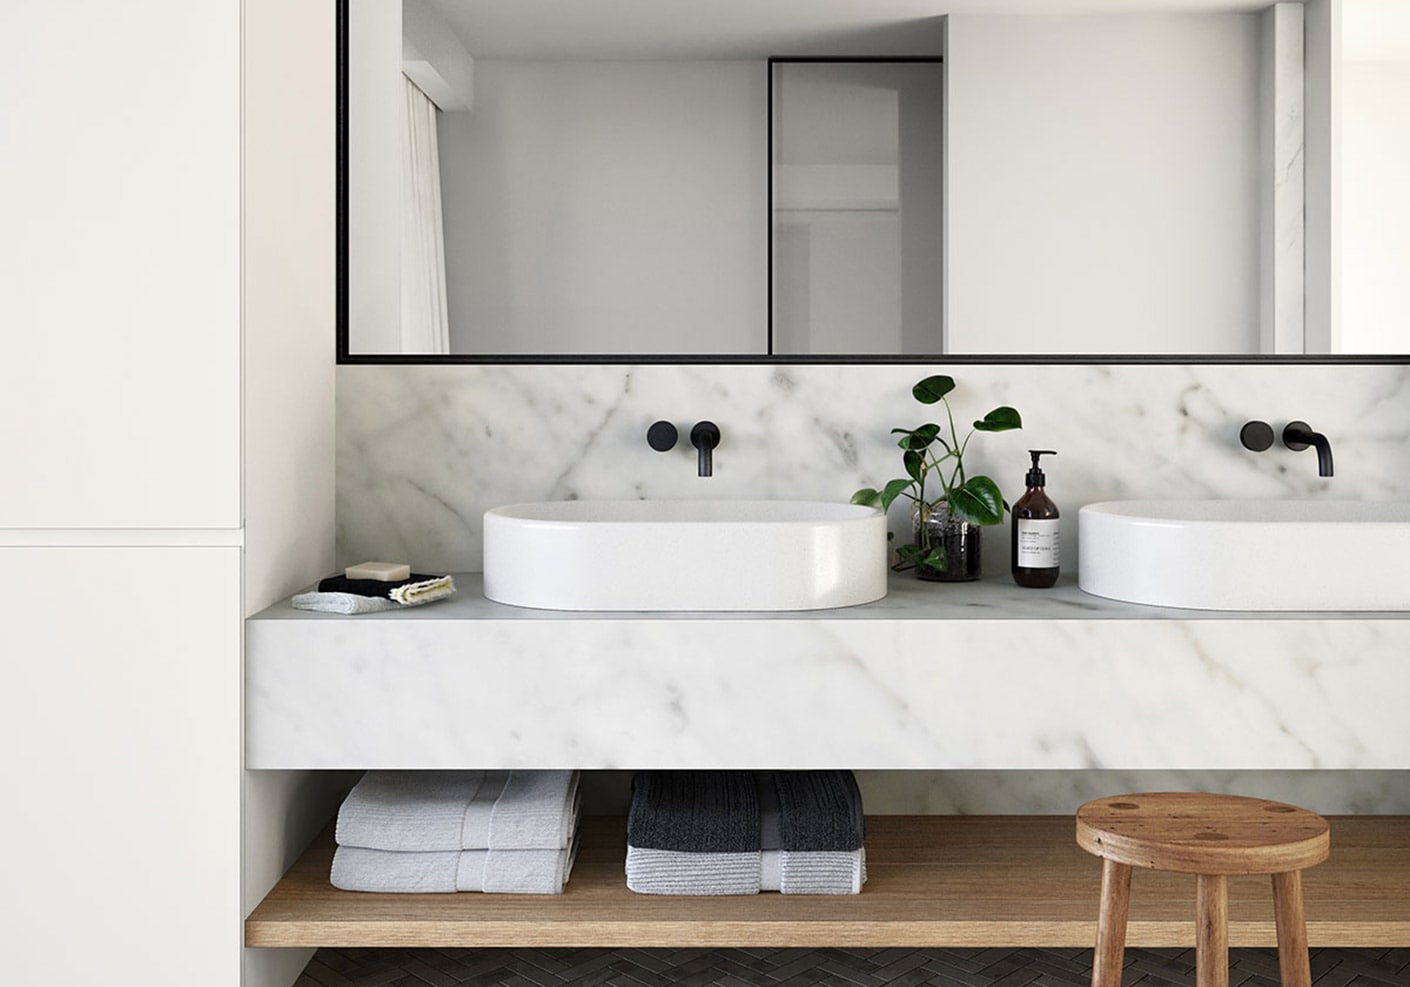 Laminex-Laminates-Bathroom-Carrara-Delicata-Sink-Classic-Oak-Shelves